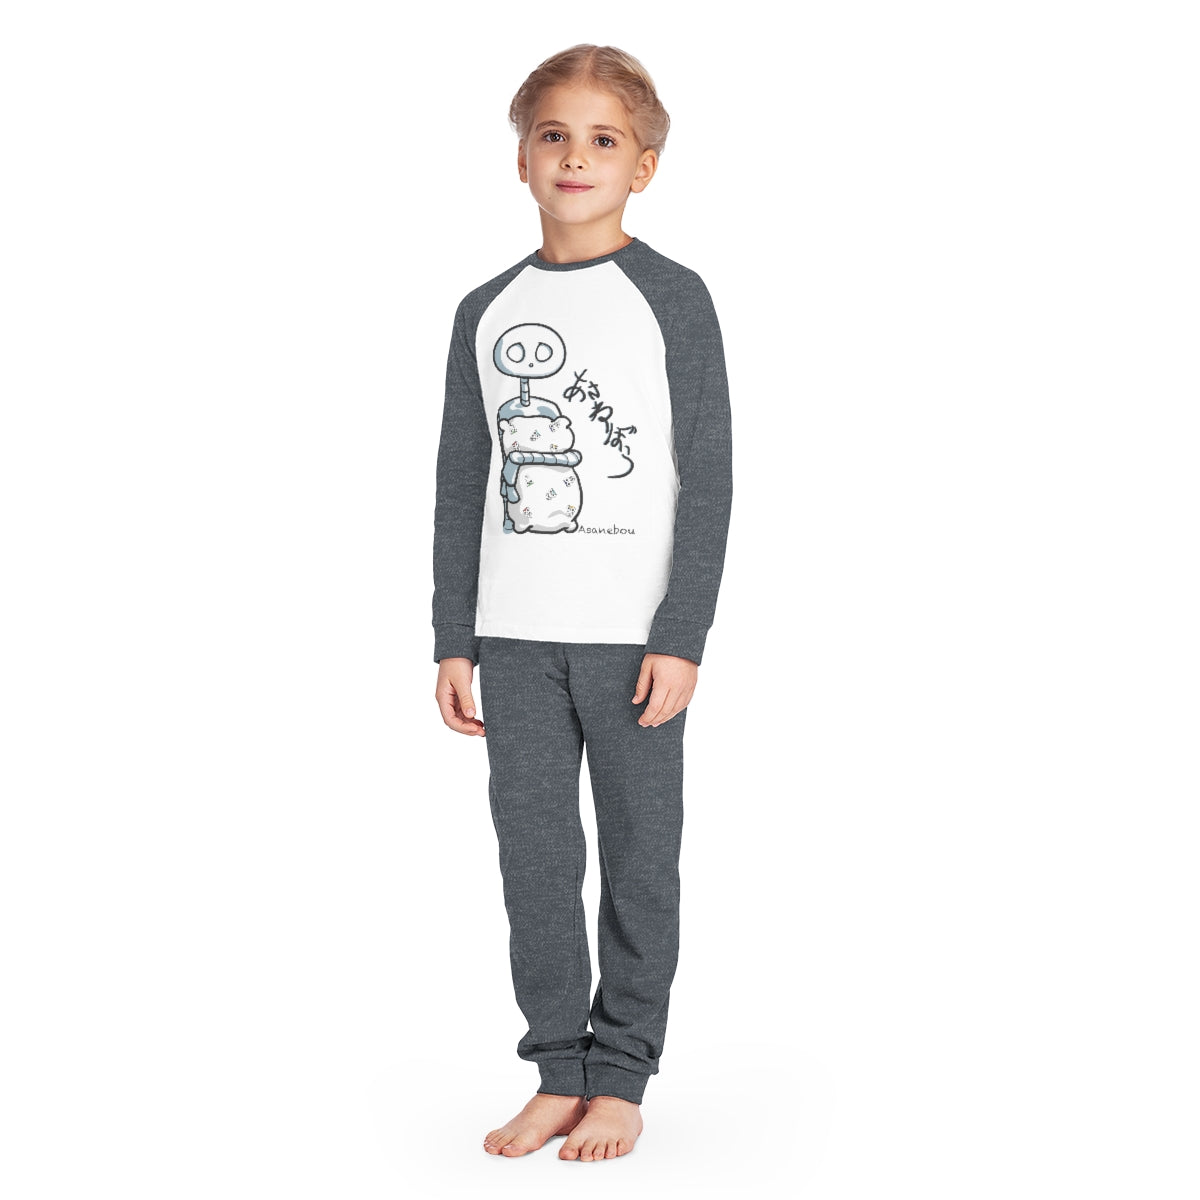 Asanebou (Sleepyhead) Kids' Pajama Set